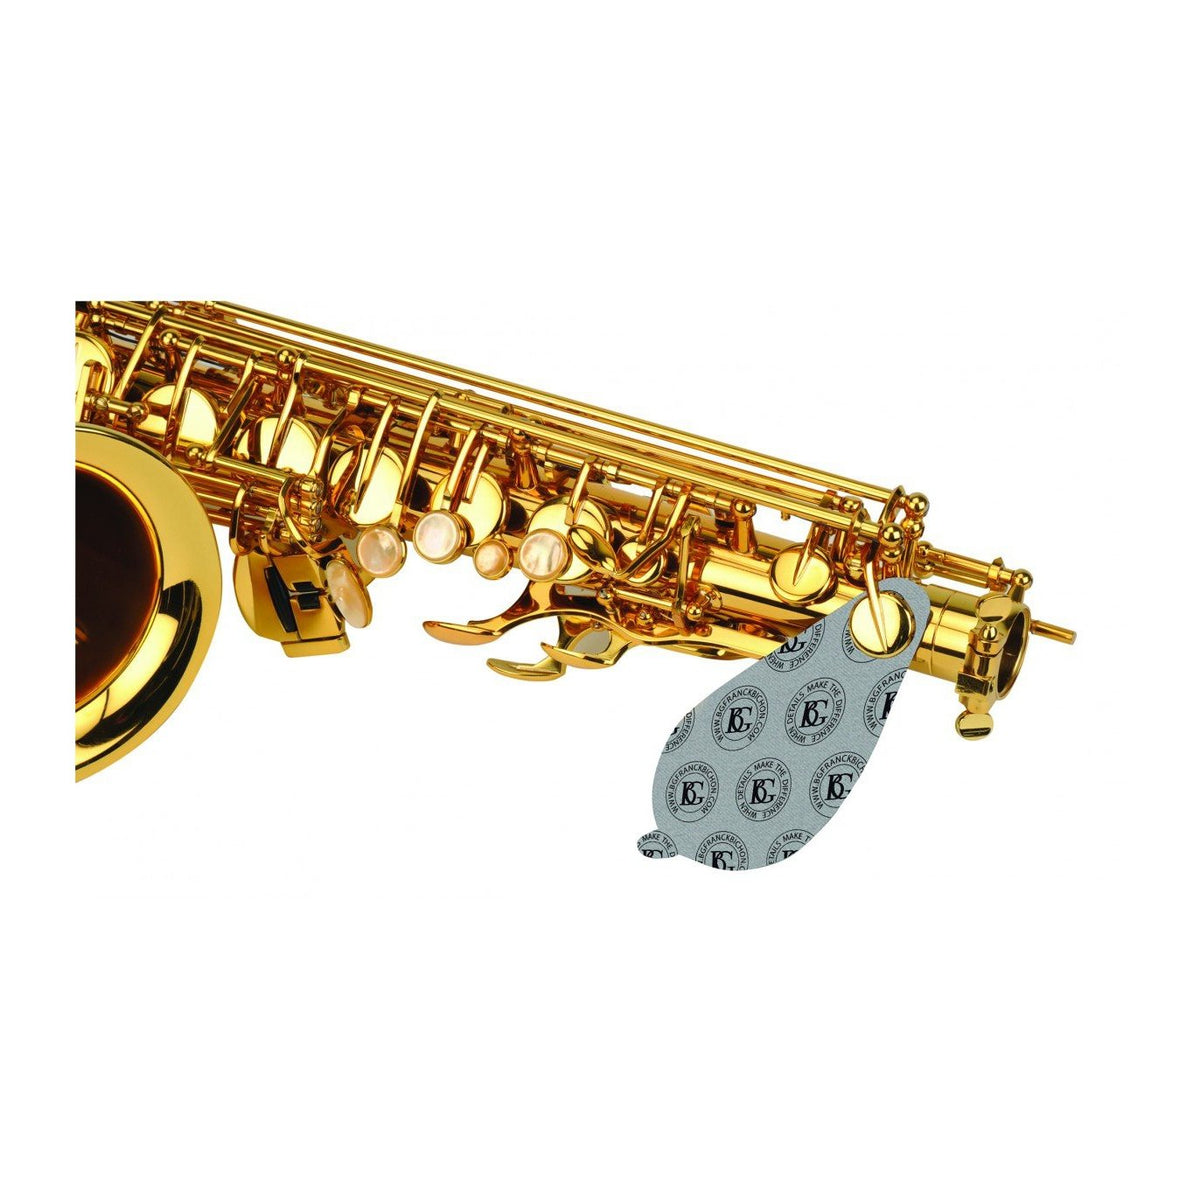 BG France - Microfiber Pad Dryer for Saxophones-Accessories-BG France-Music Elements